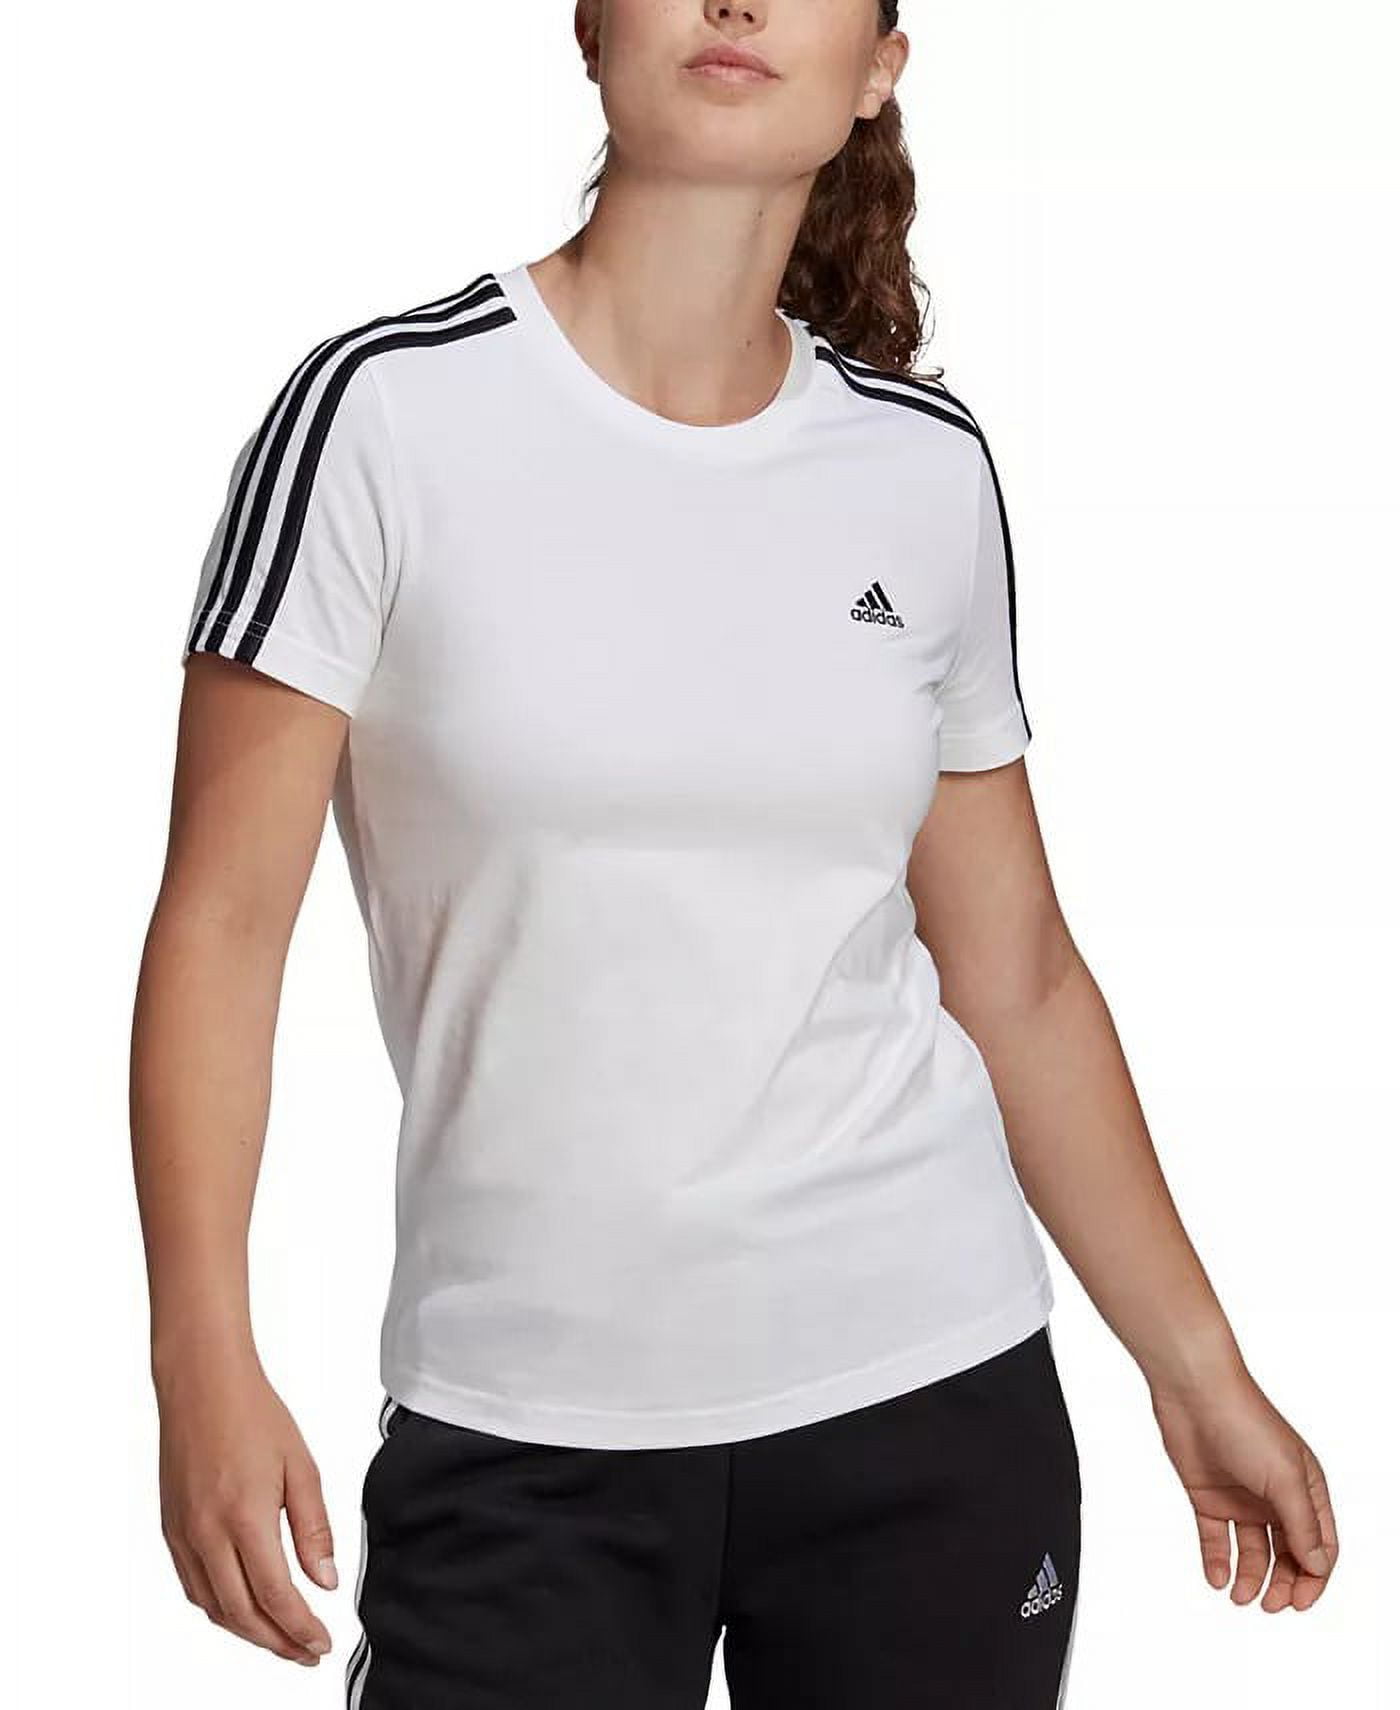 Adidas WHITE Women's Essentials Cotton 3 Stripe T-Shirt, US X-Small